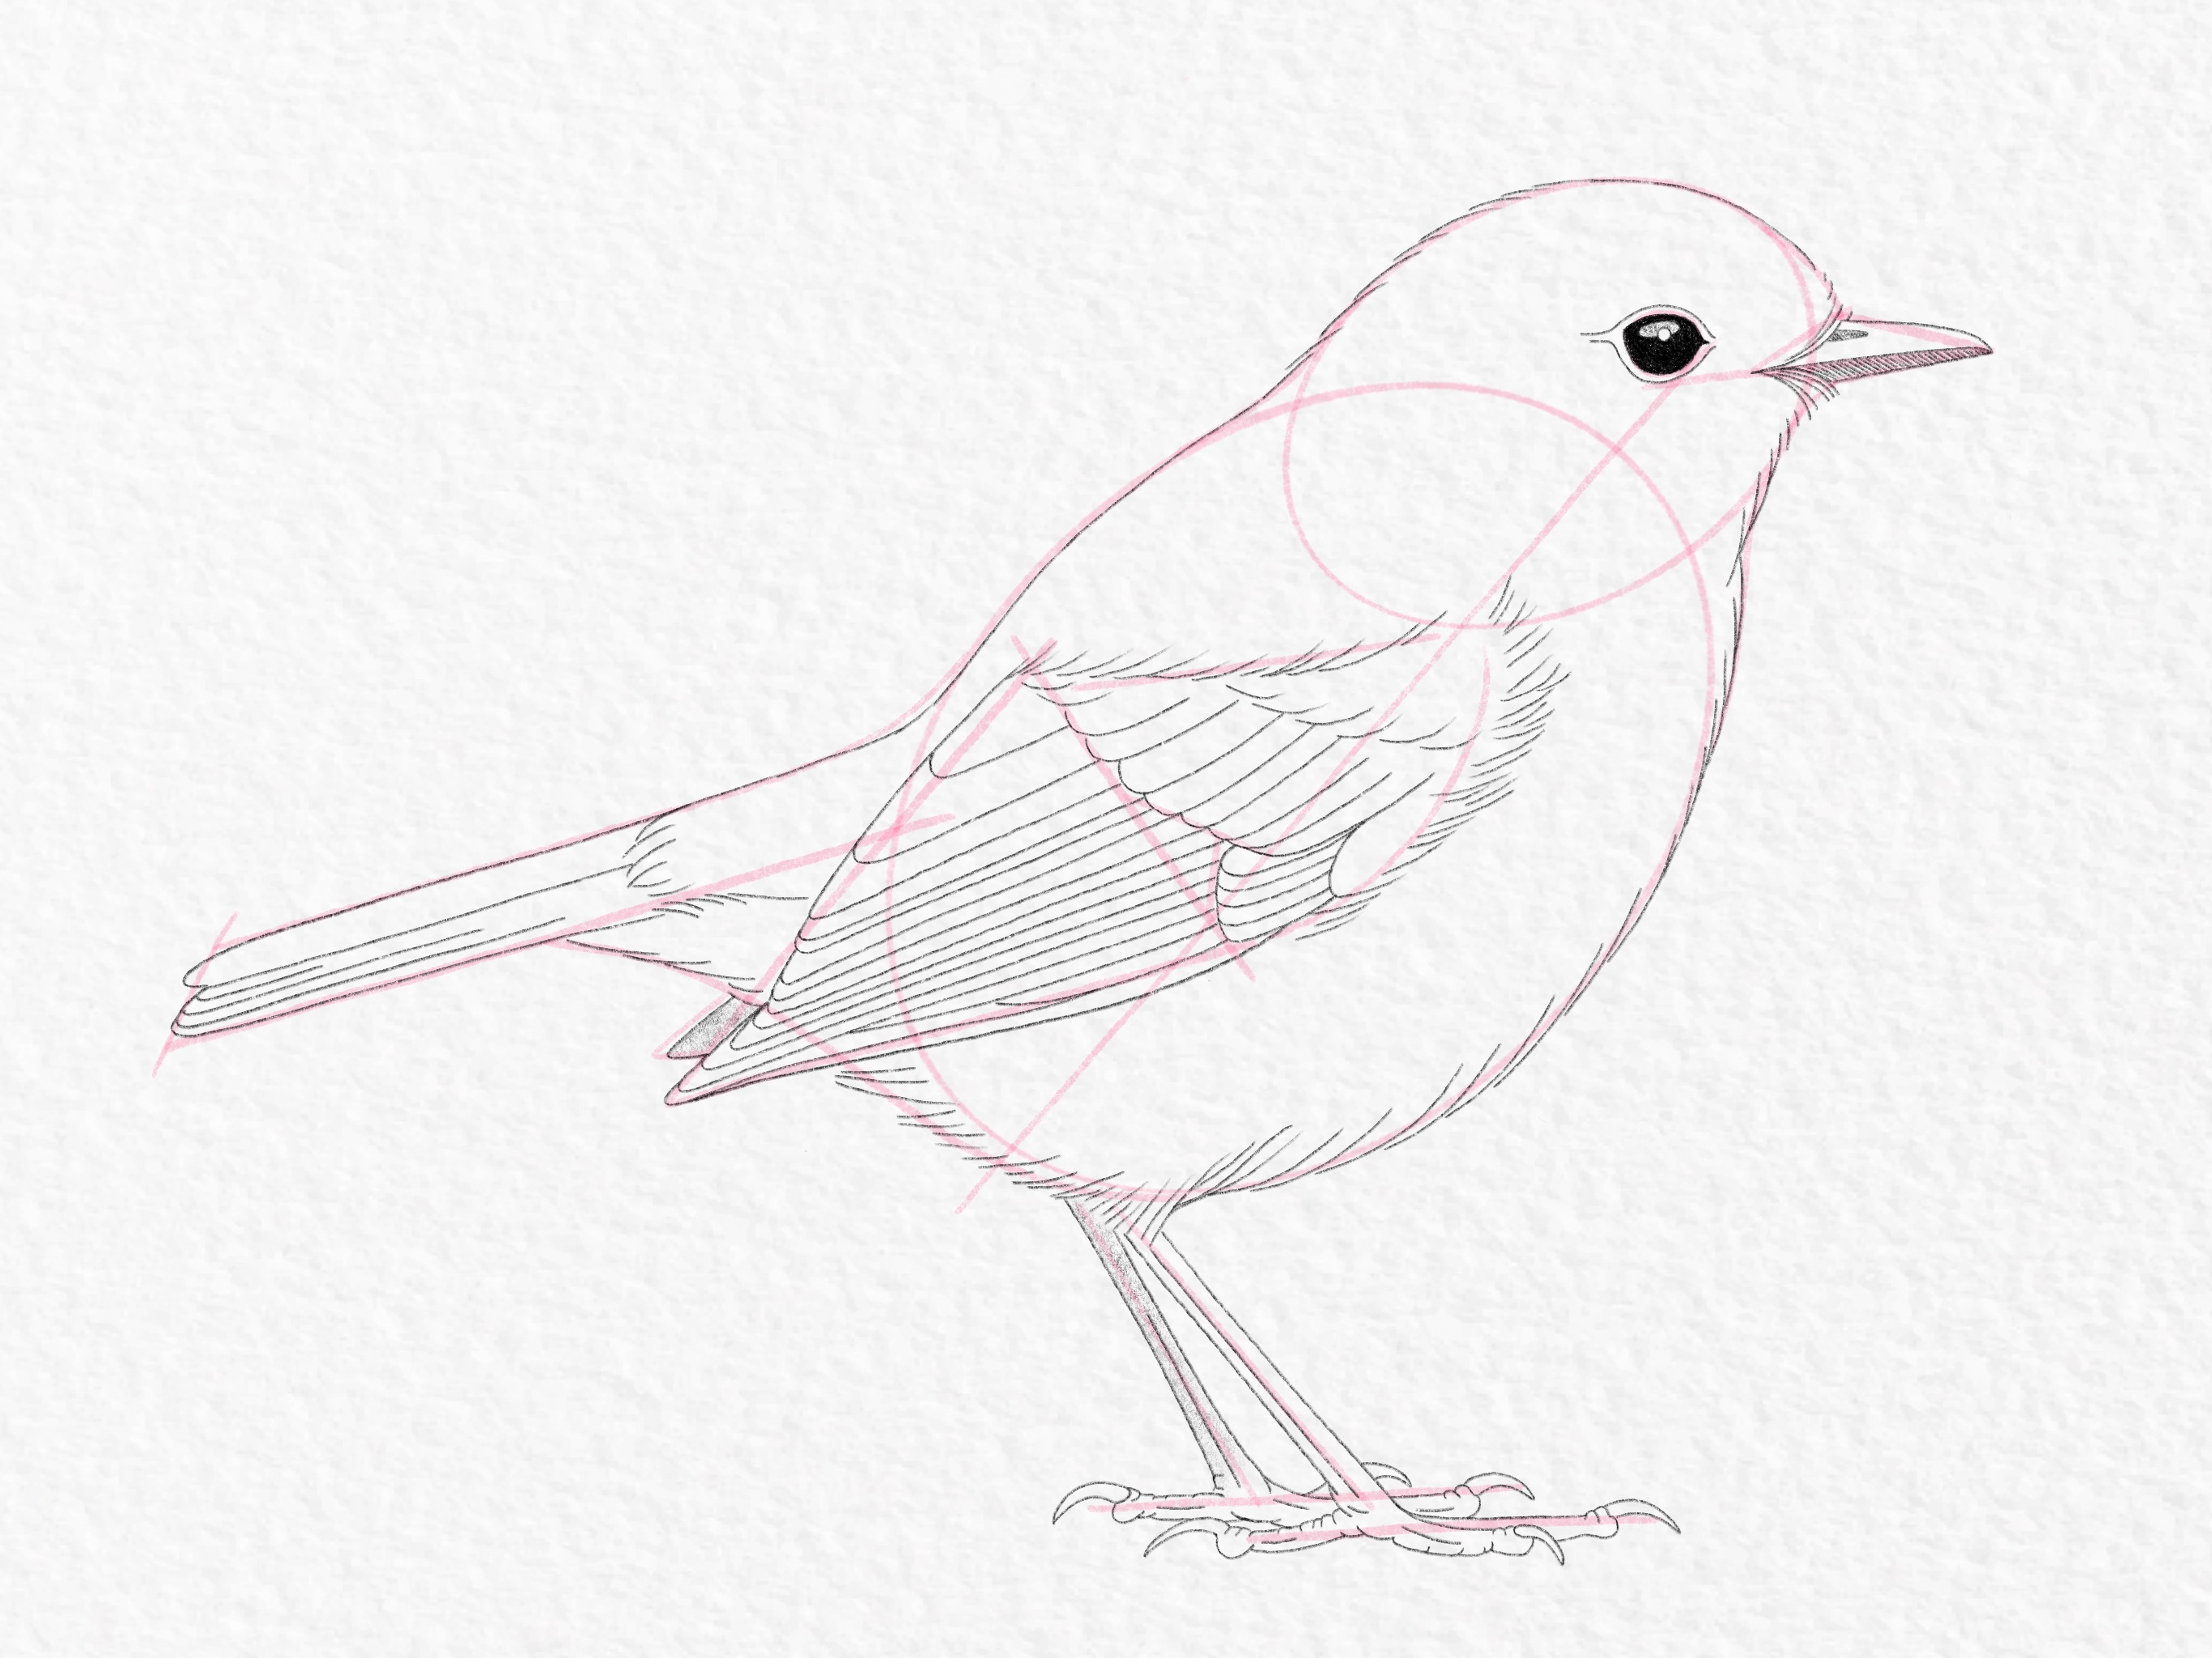 How to draw a bird - Step 18b